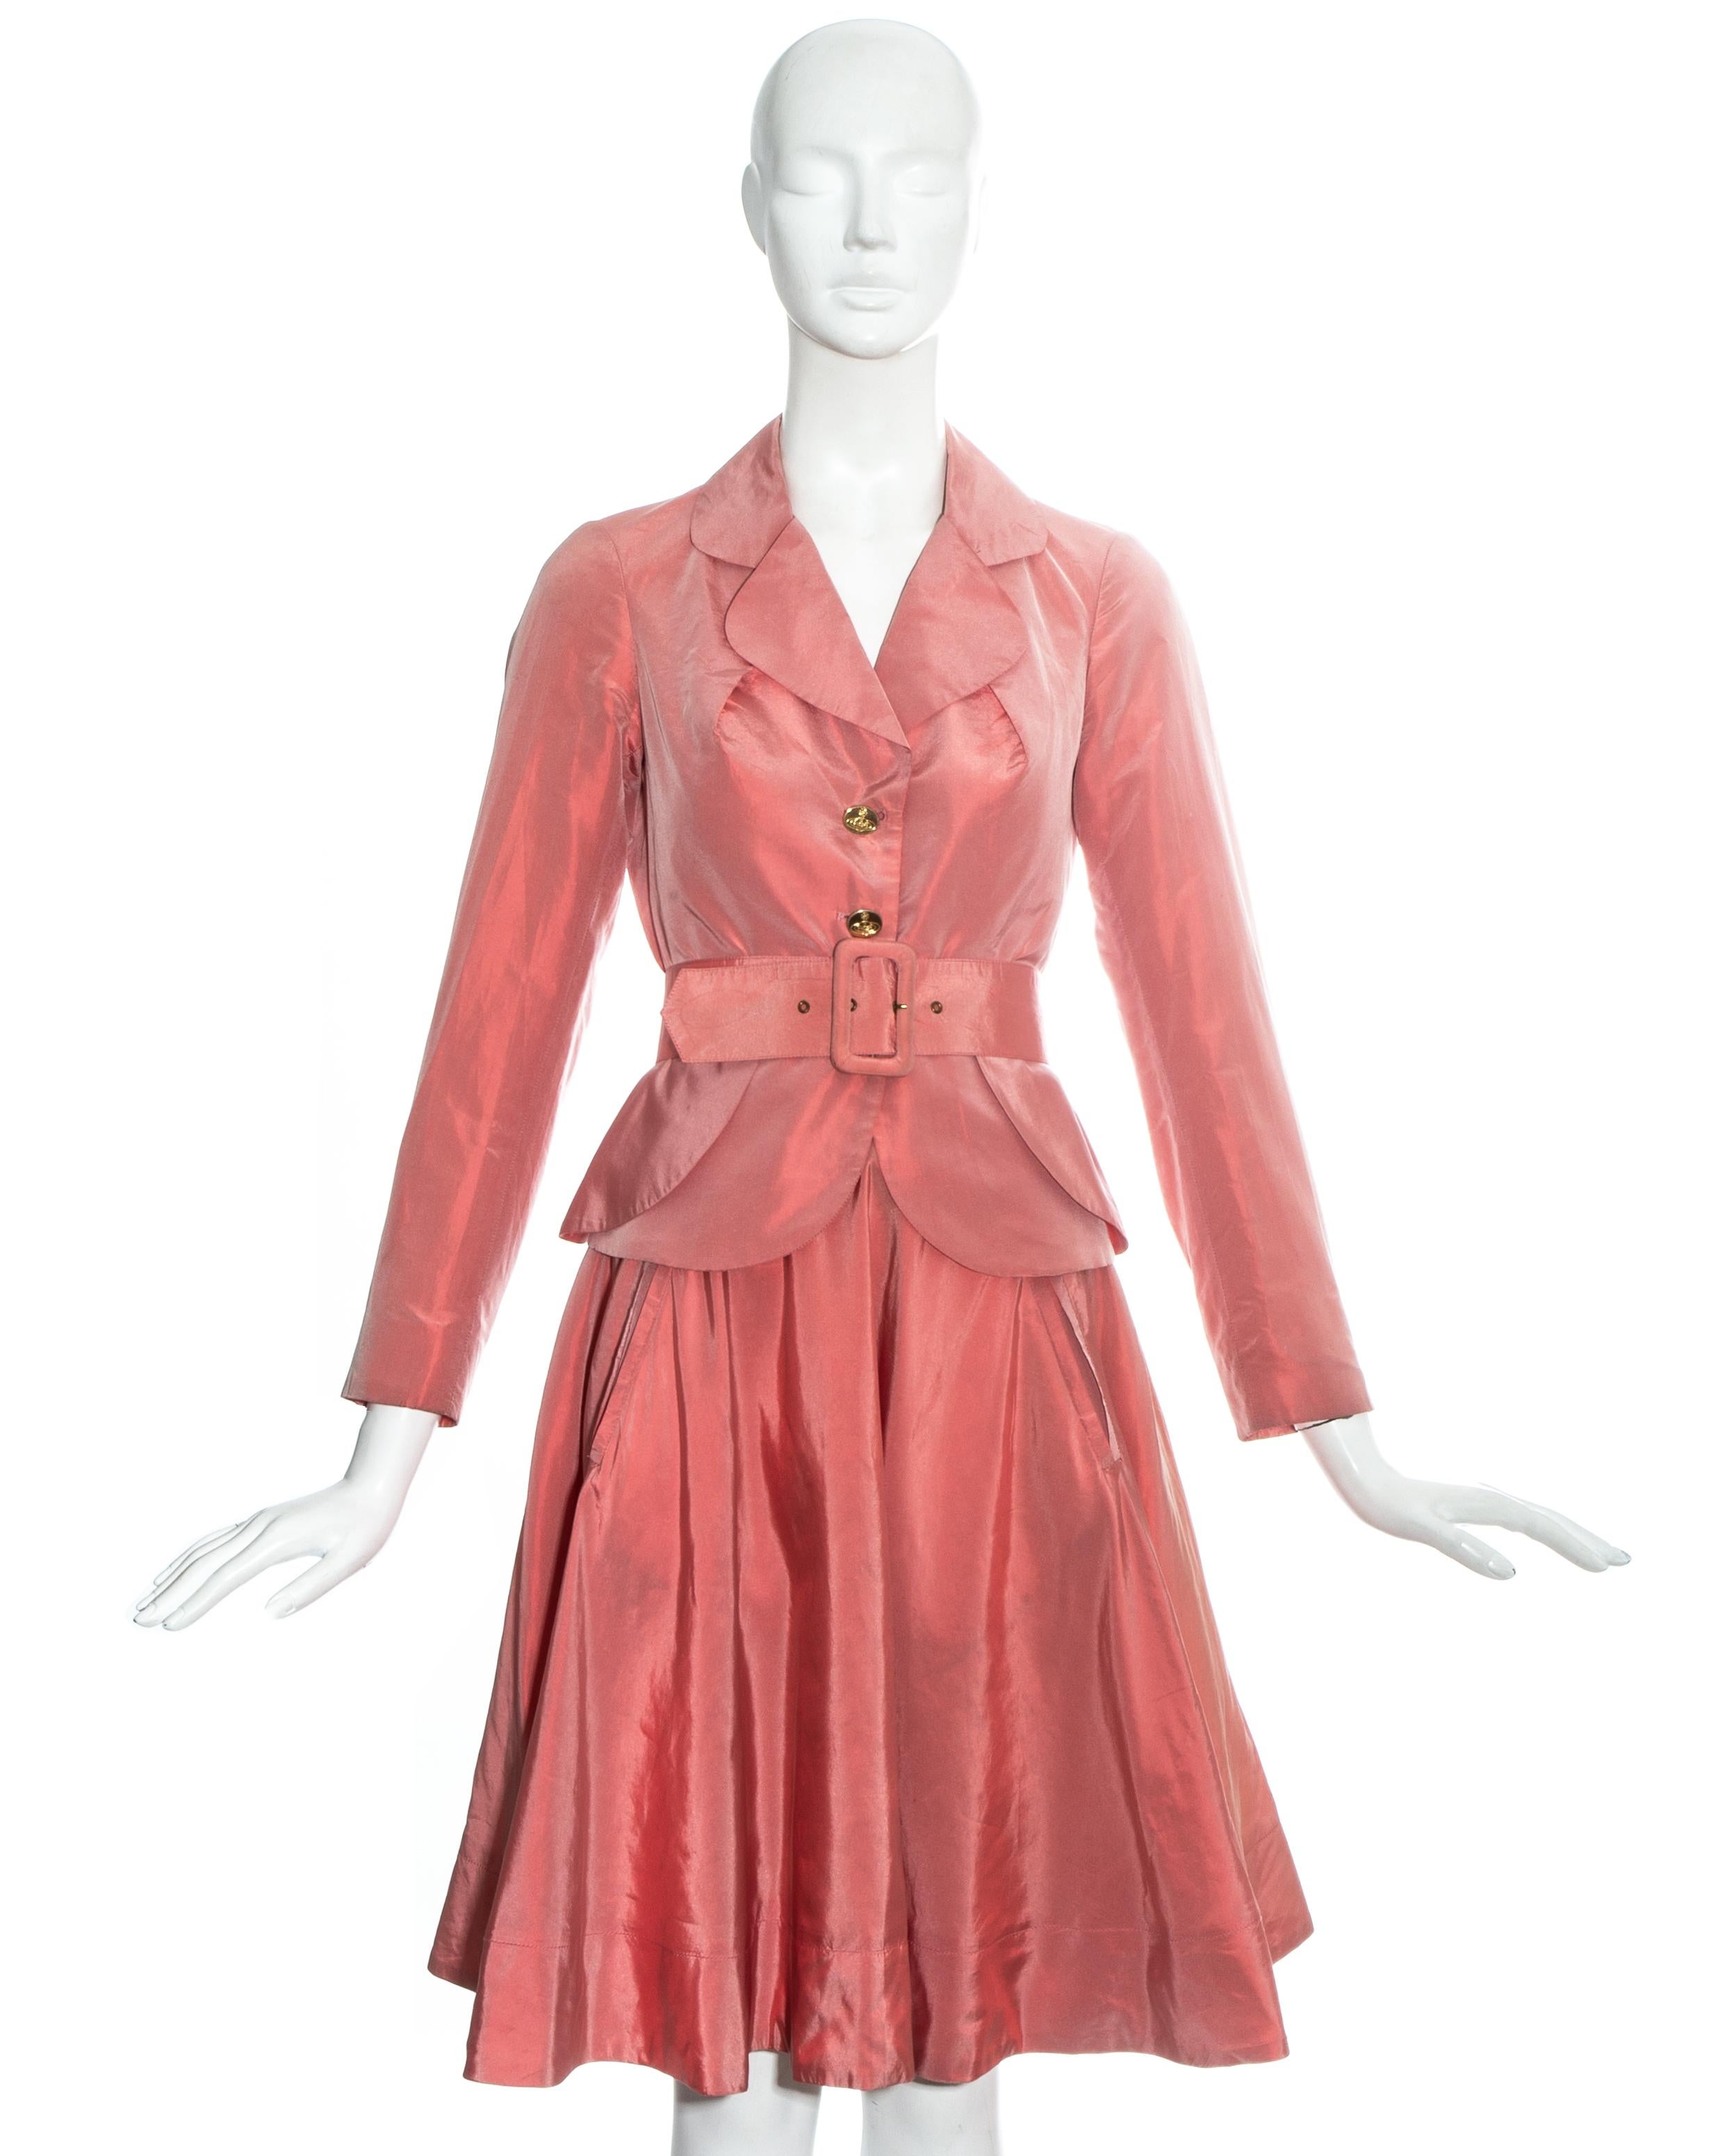 Vivienne Westwood salmon pink silk peplum blazer jacket and skirt suit with matching fabric belt

Spring-Summer 1994